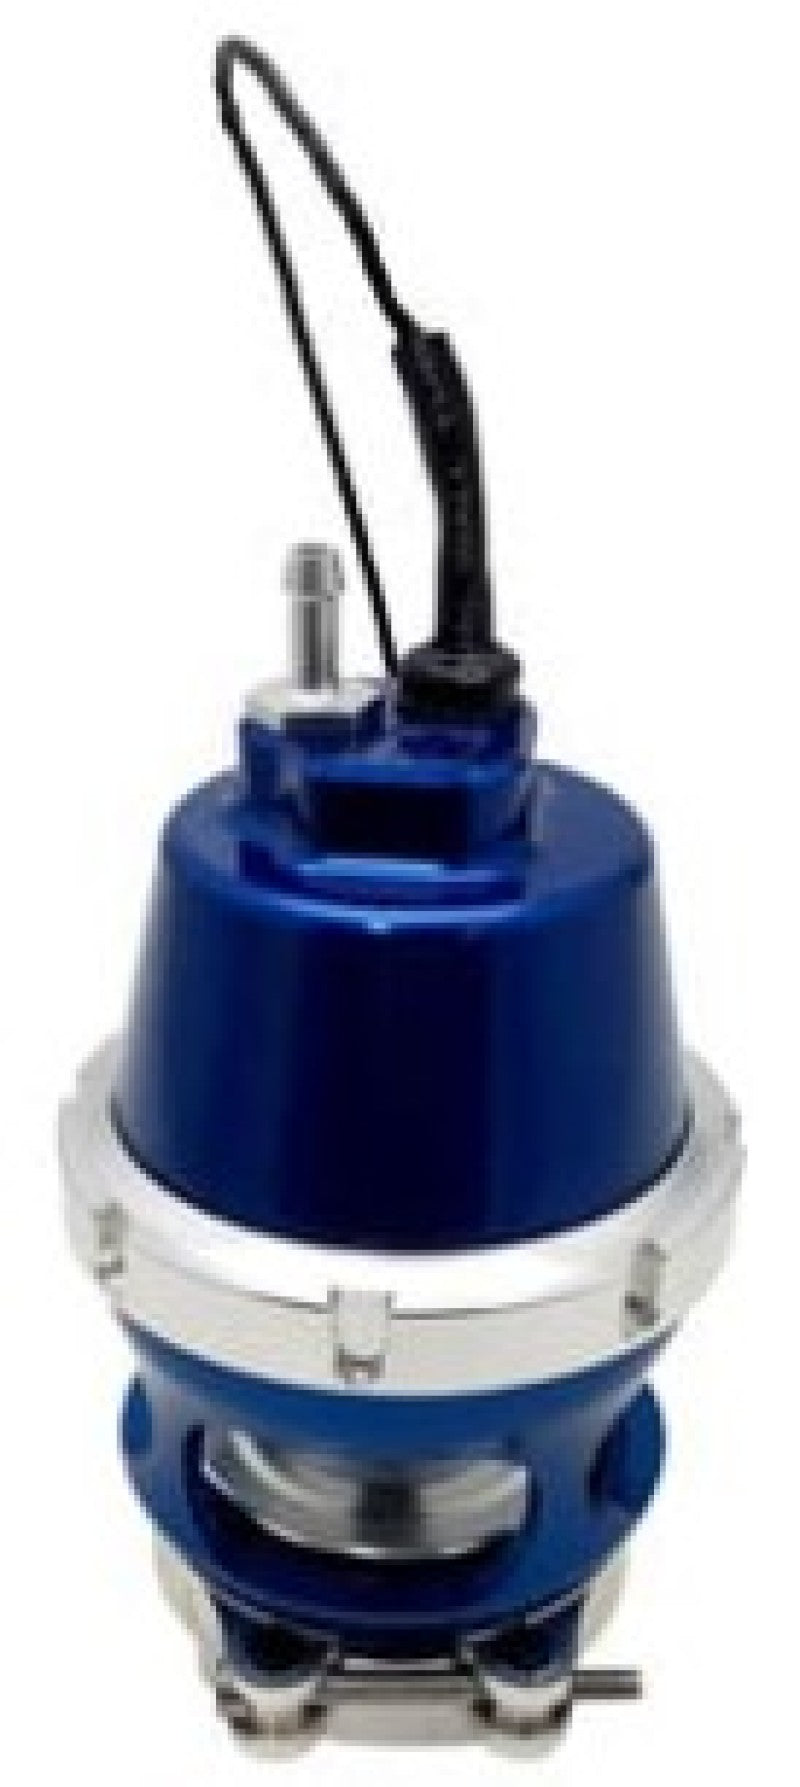 TS-0207-1101 Turbosmart BOV Power Port w/ Sensor Cap - Blue